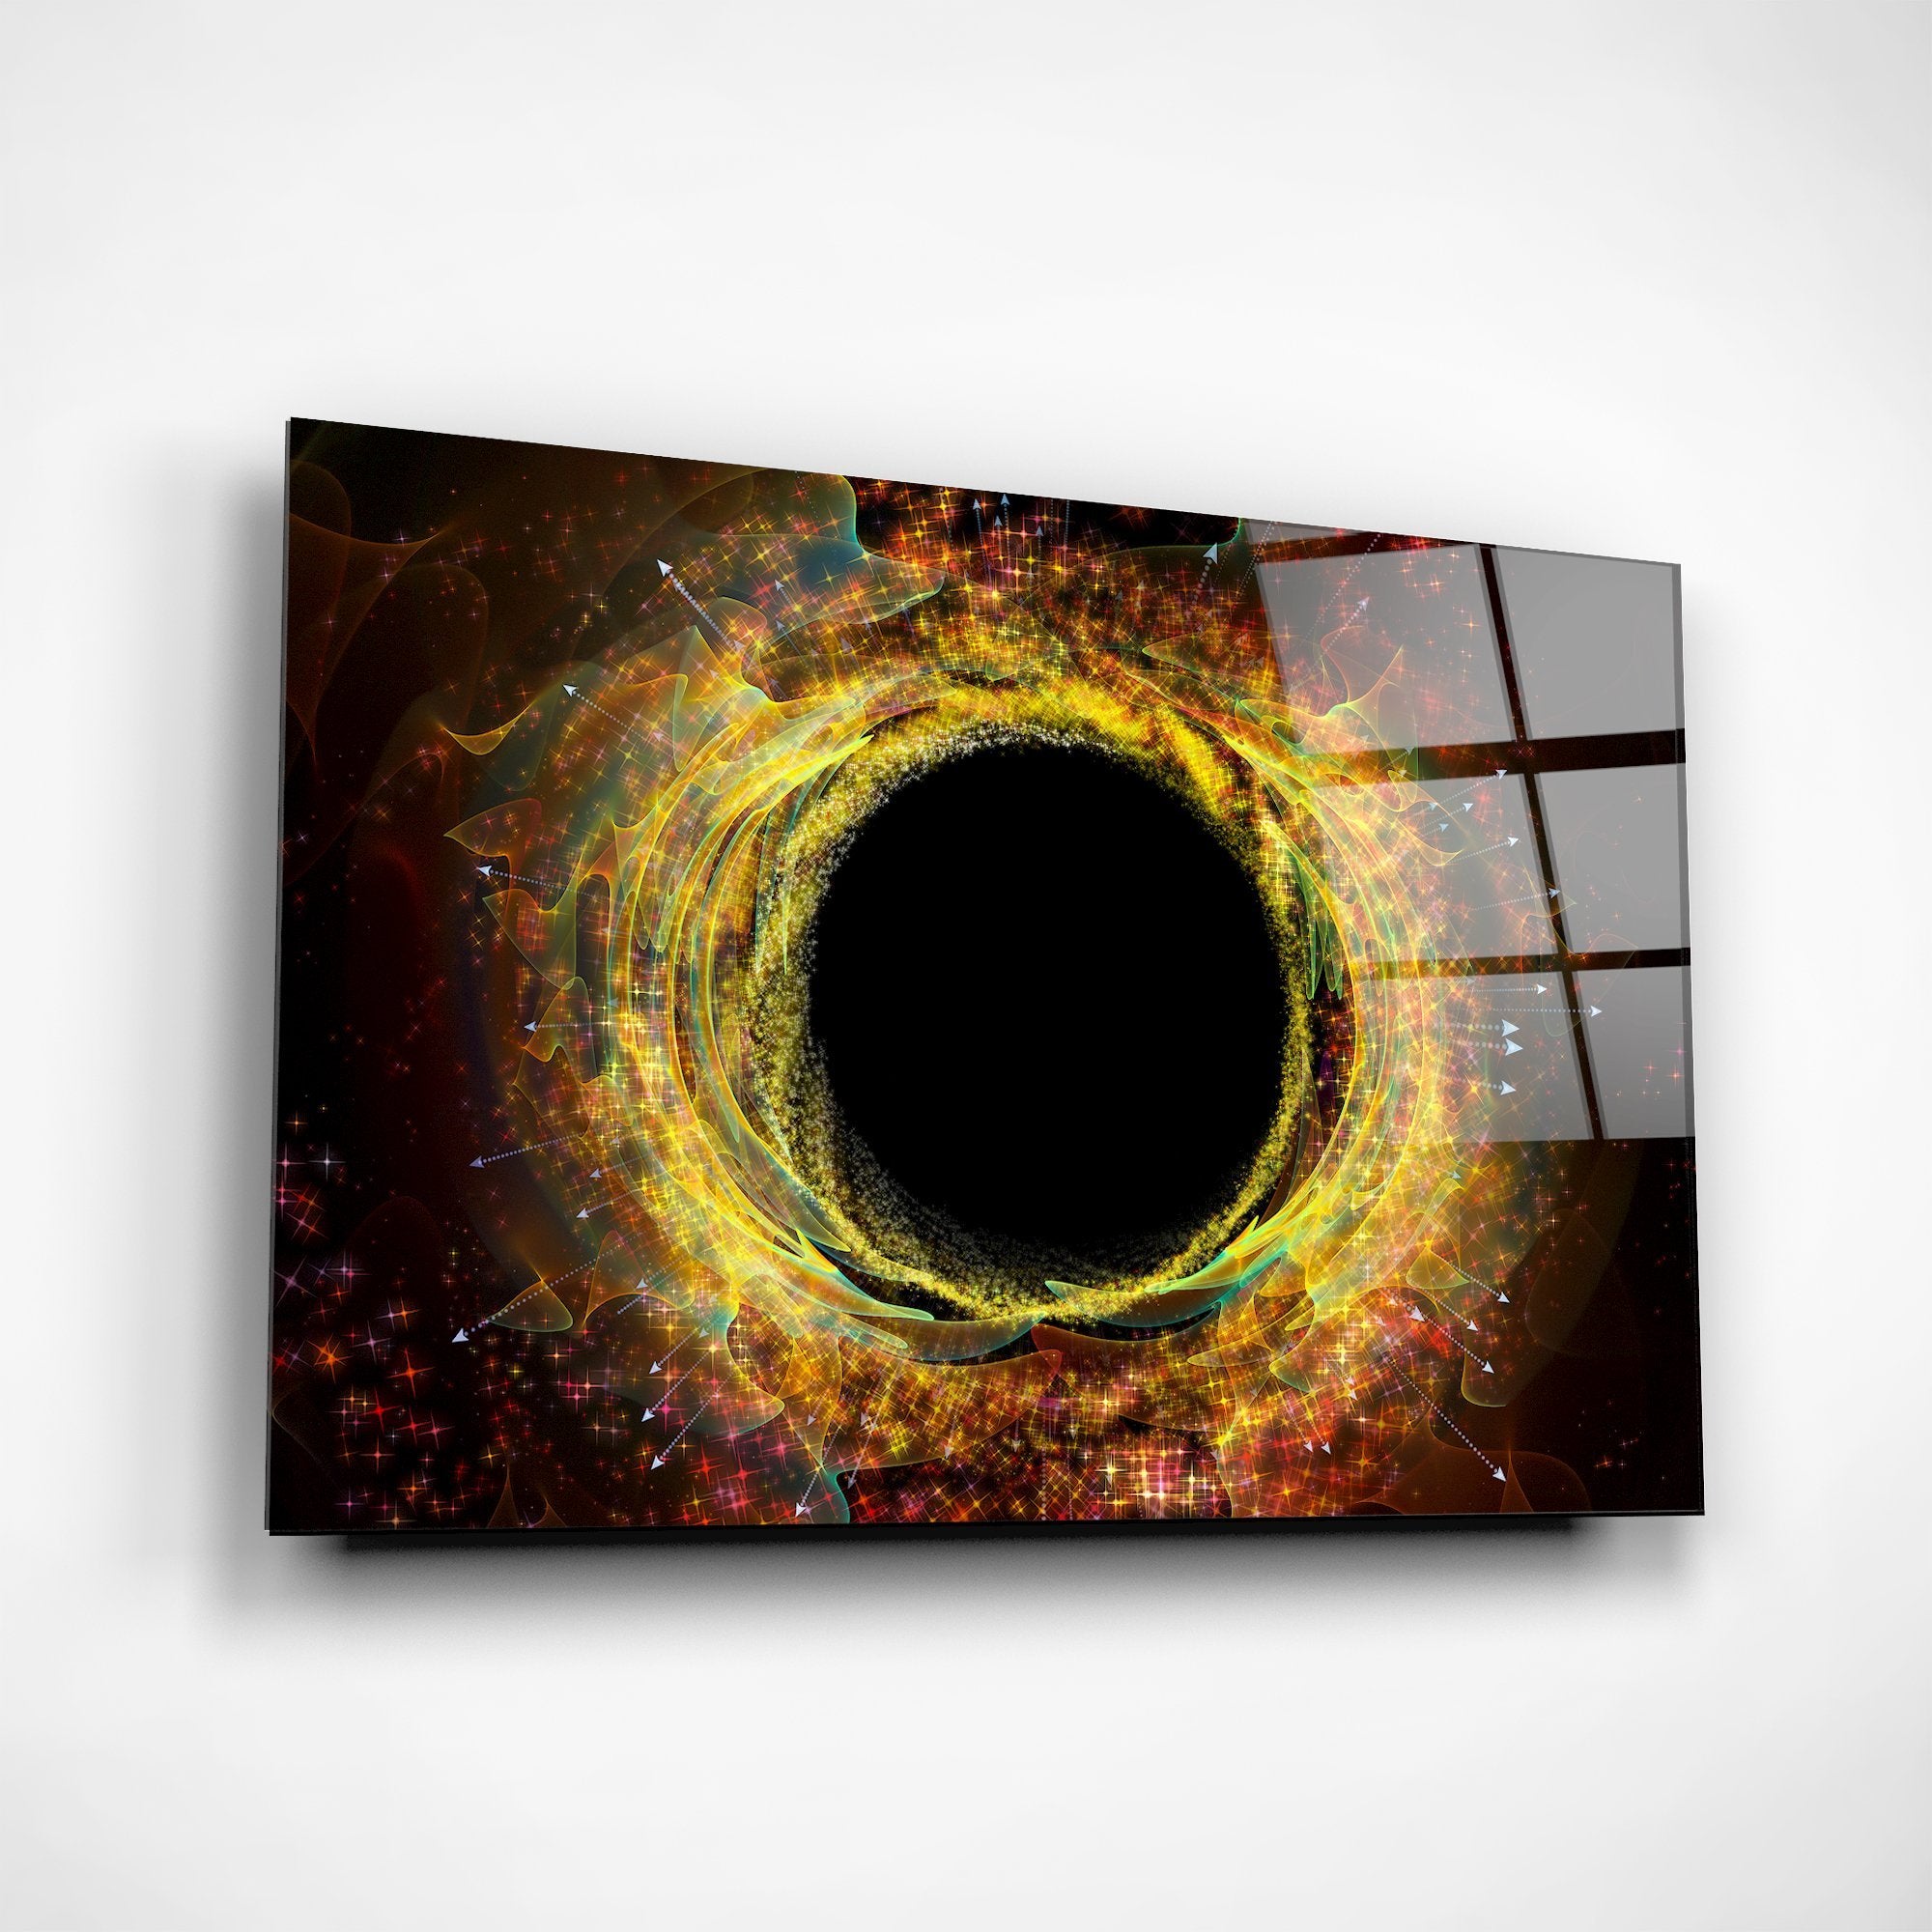 Foto obraz na szkle - Abstrakcja, czarna dziura (stonowany) - Gallart.pl